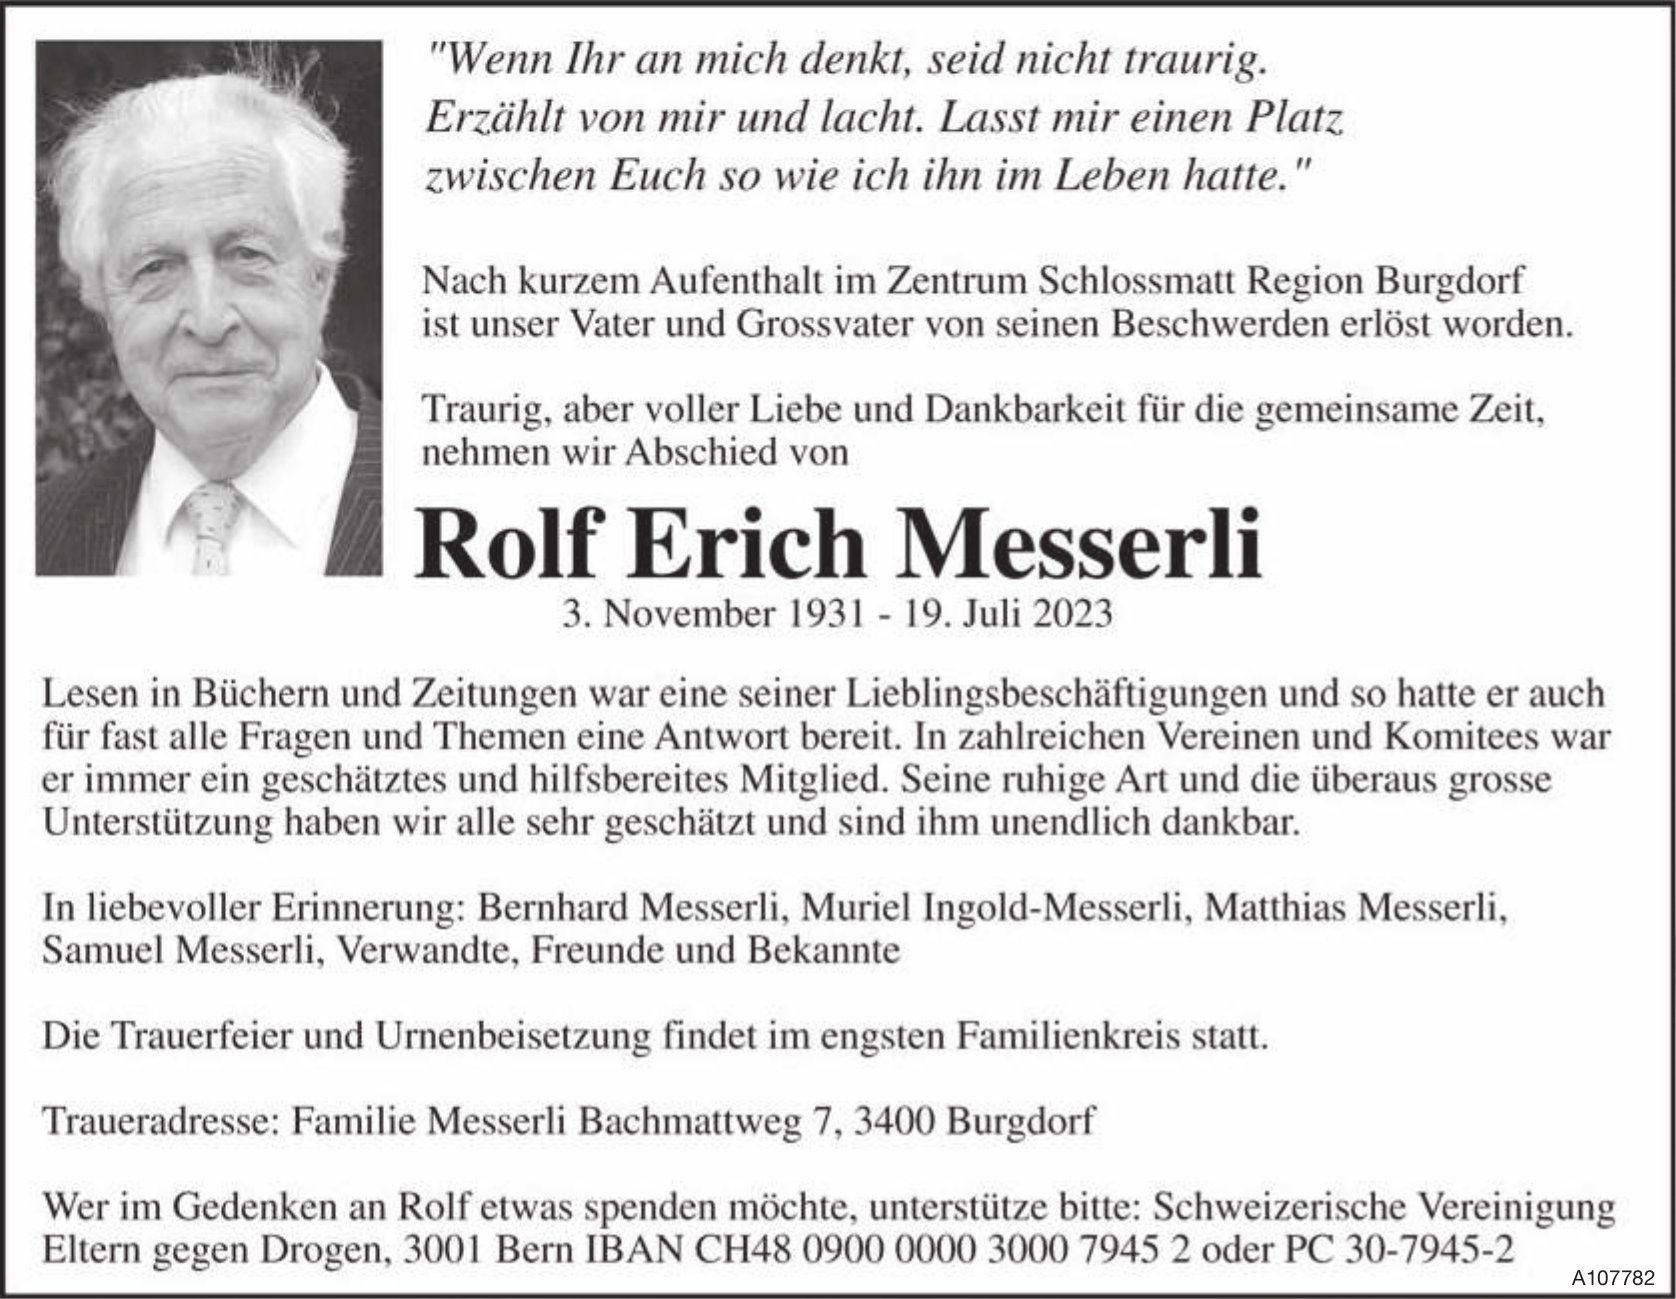 Rolf Erich Messerli, Juli 2023 / TA